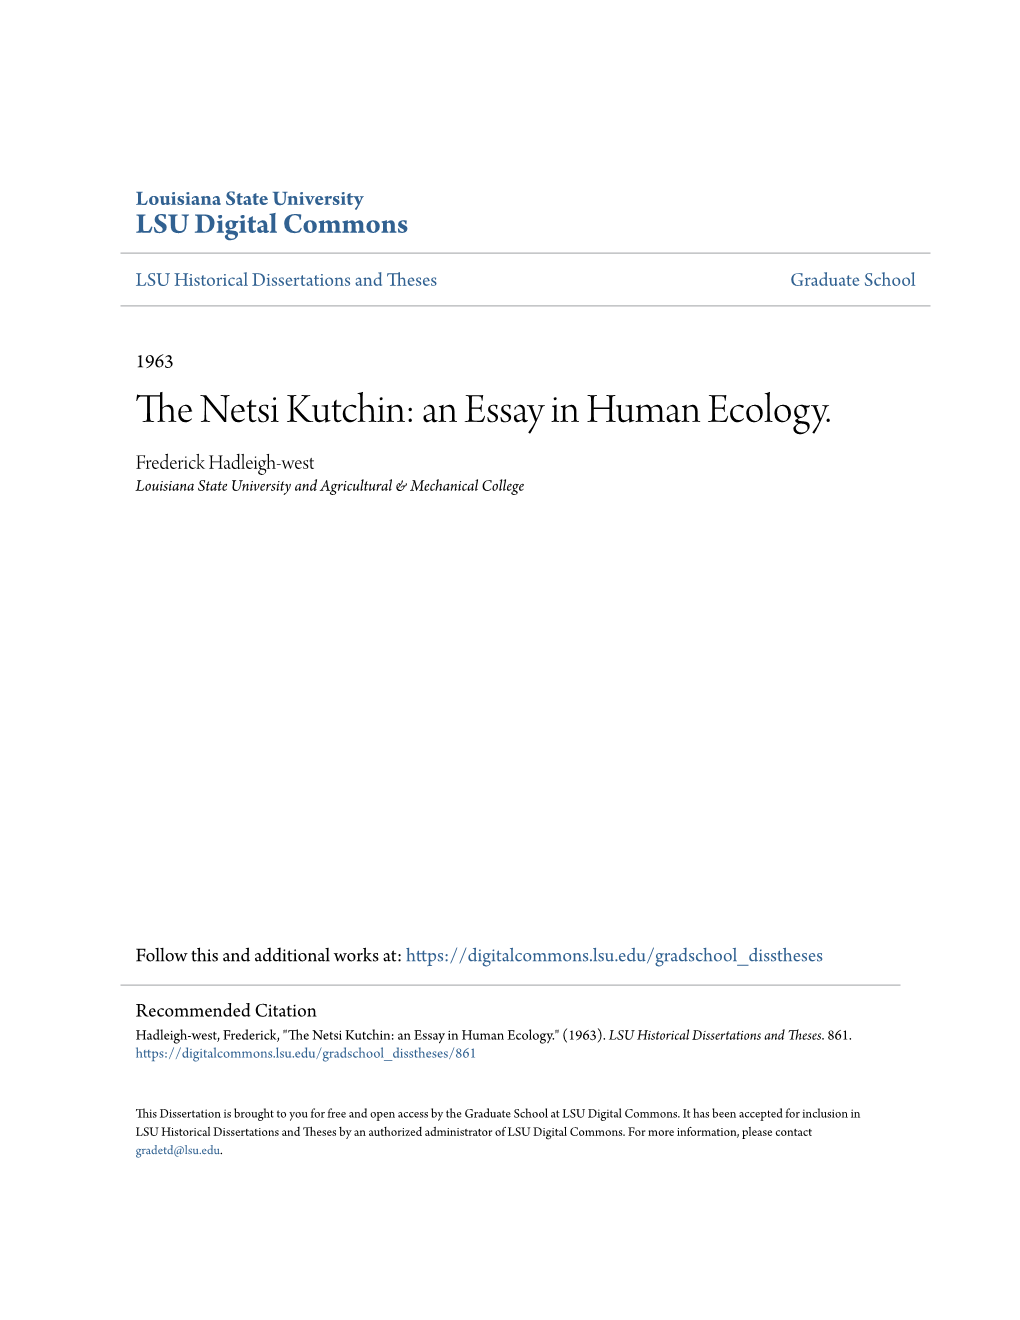 The Netsi Kutchin: an Essay in Human Ecology